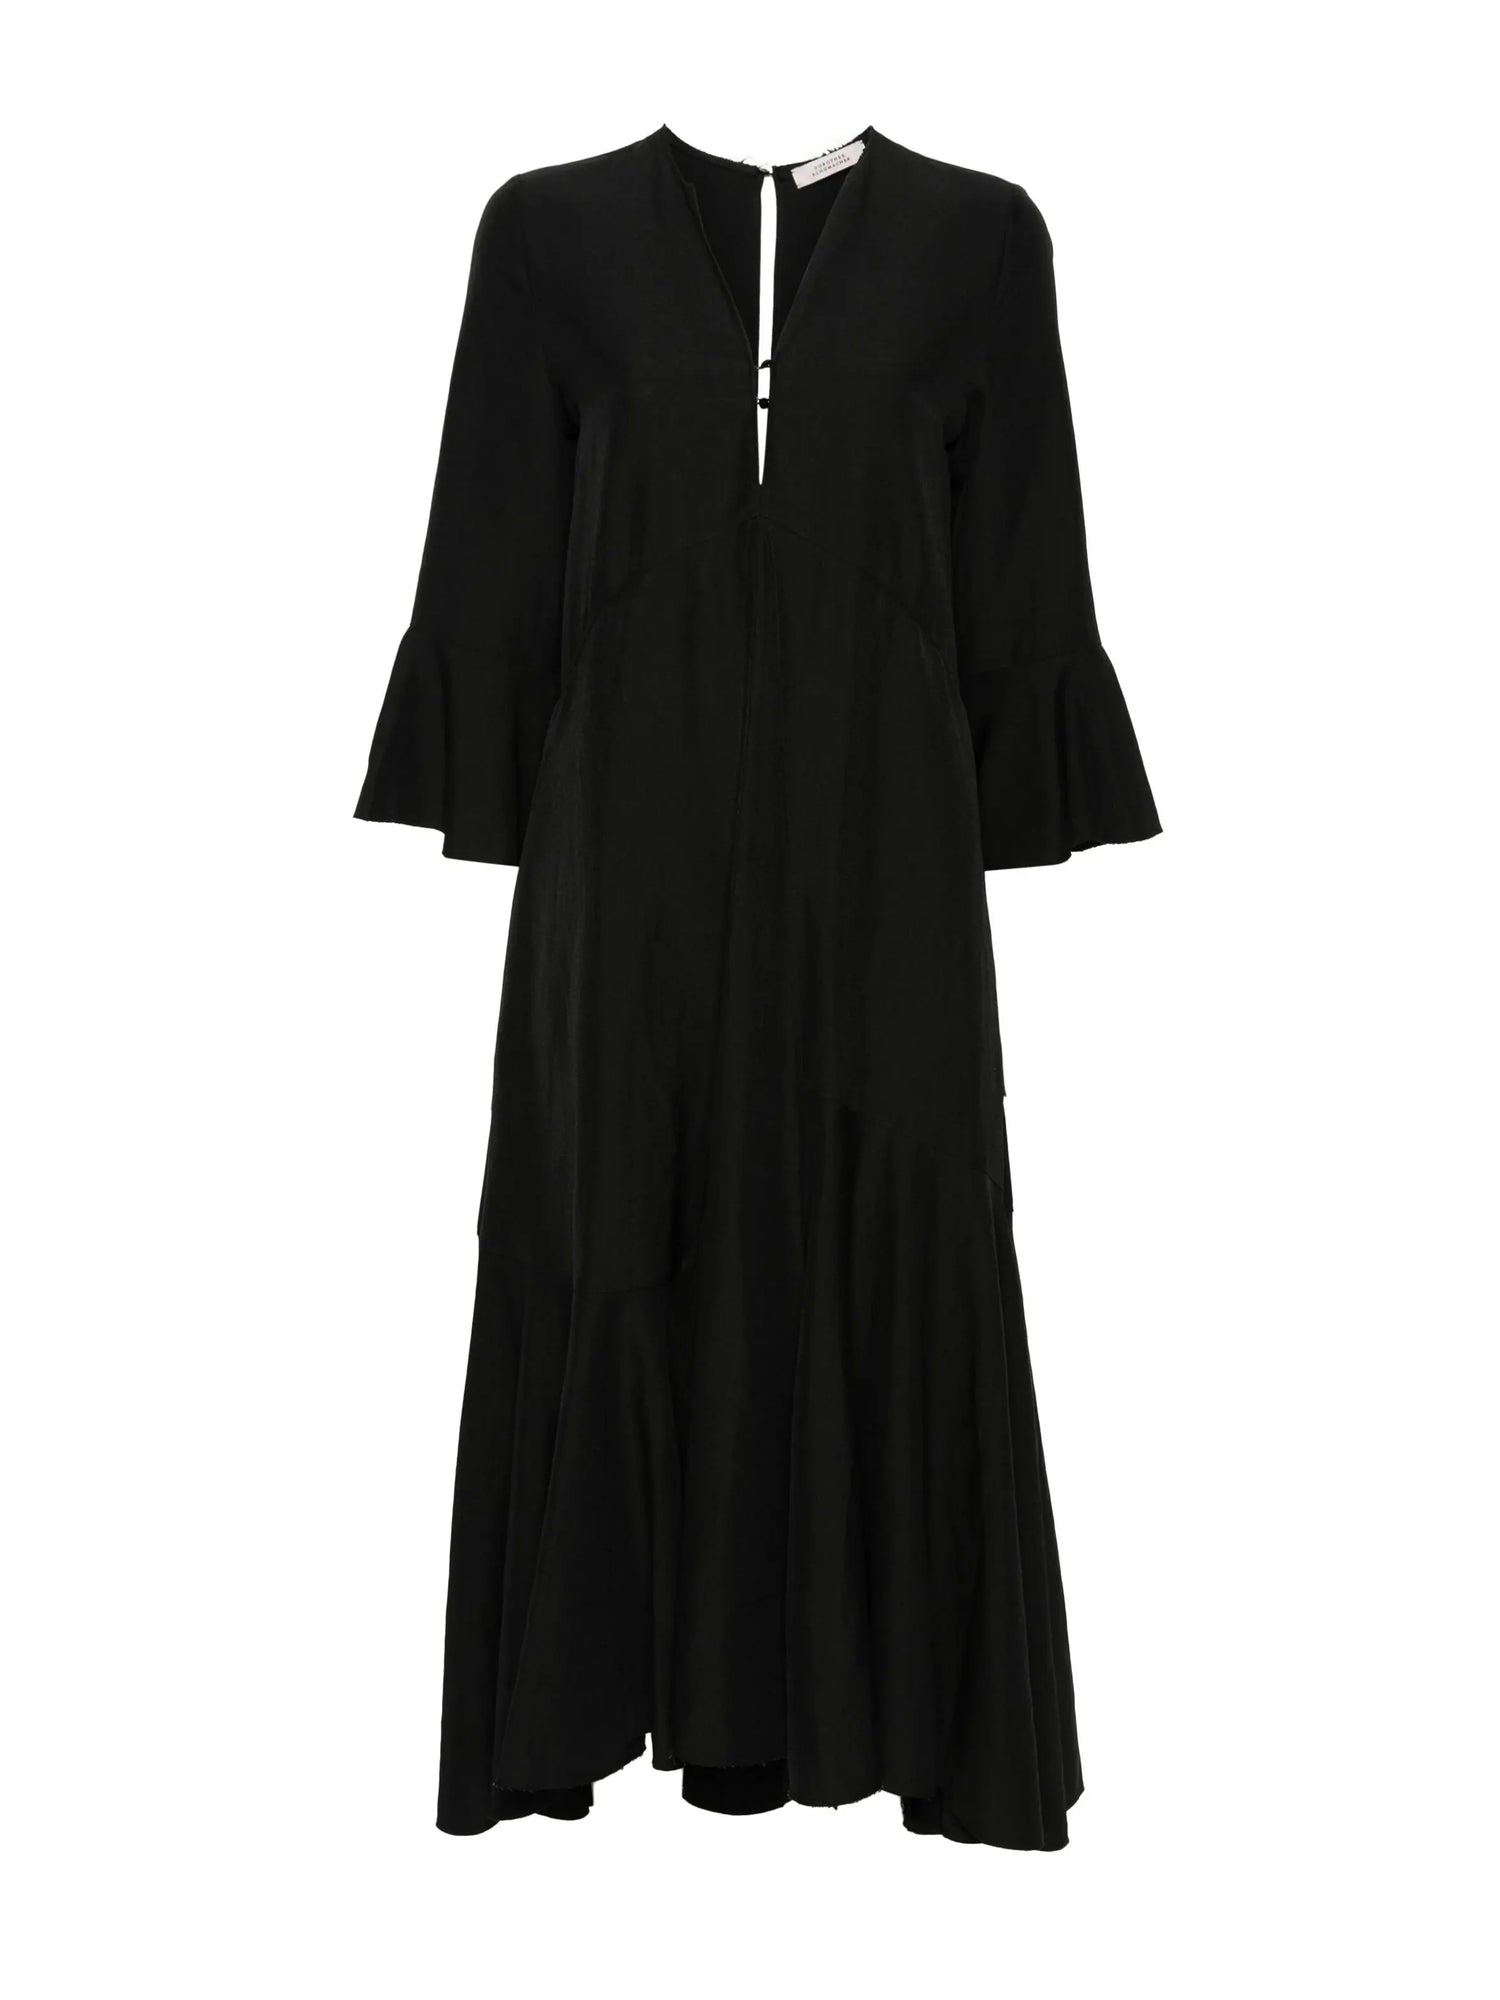 SUMMER CRUISE dress, black